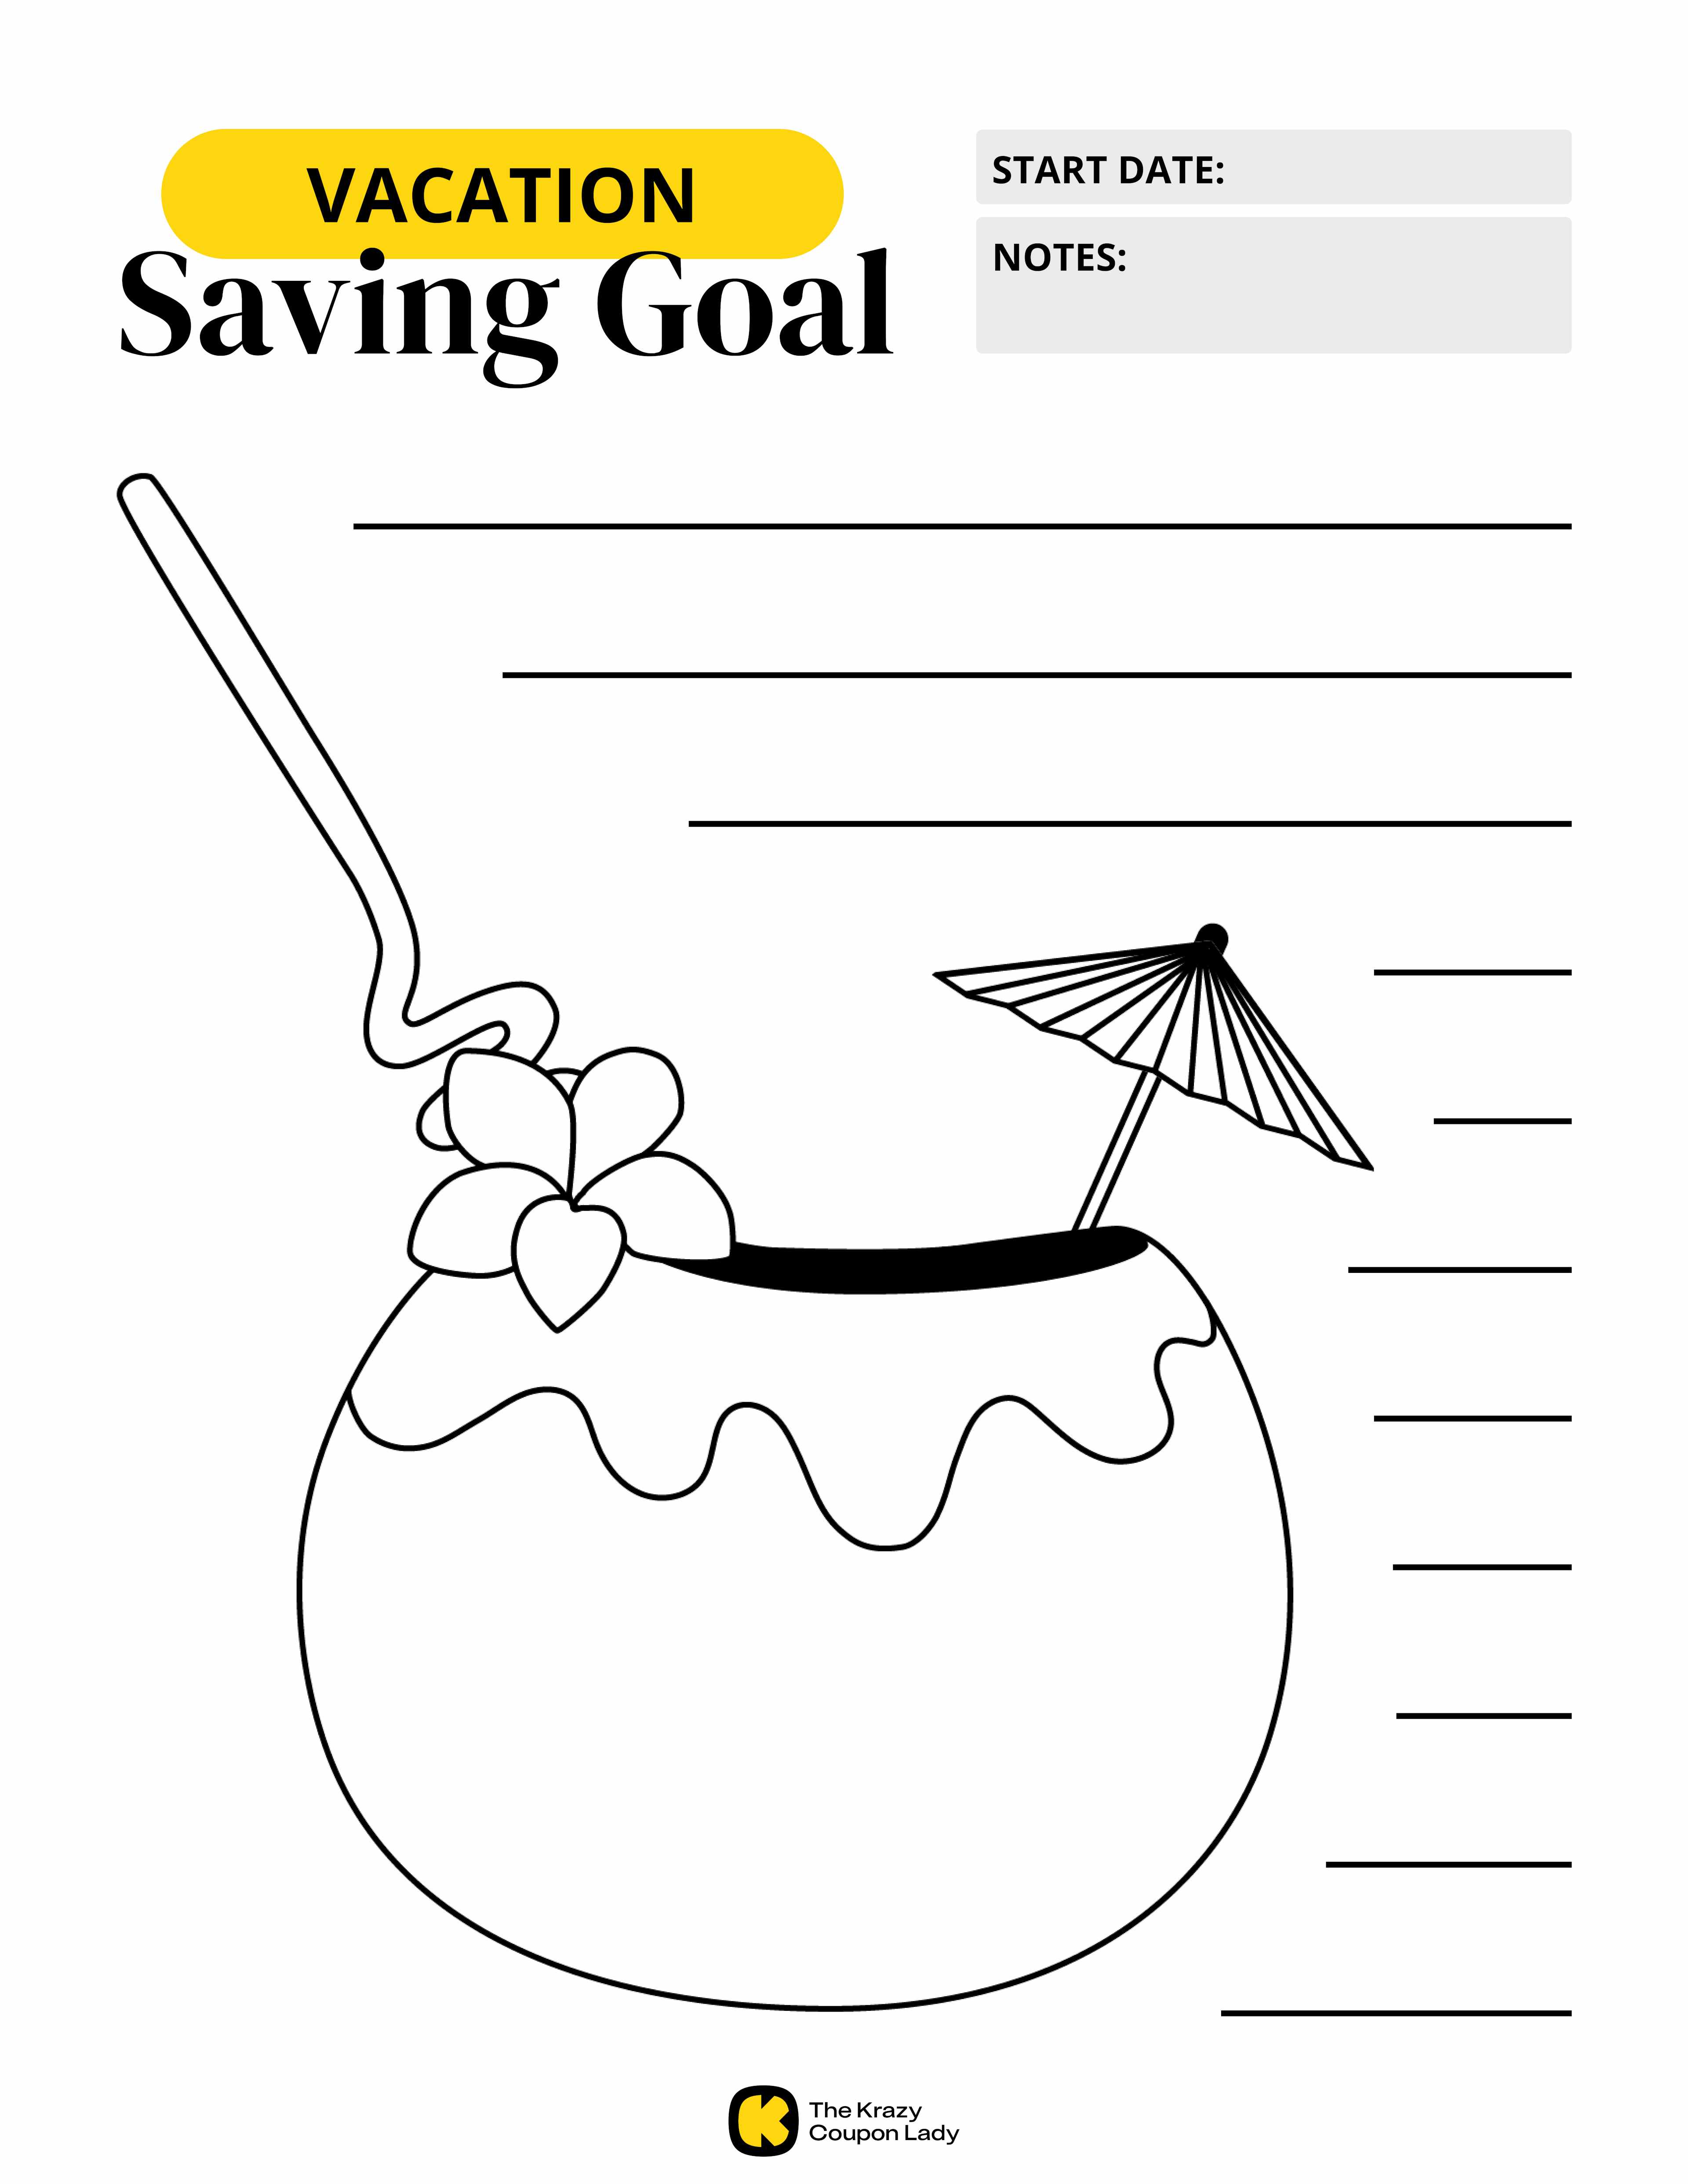 Vacation Savings Goal printable from KCL